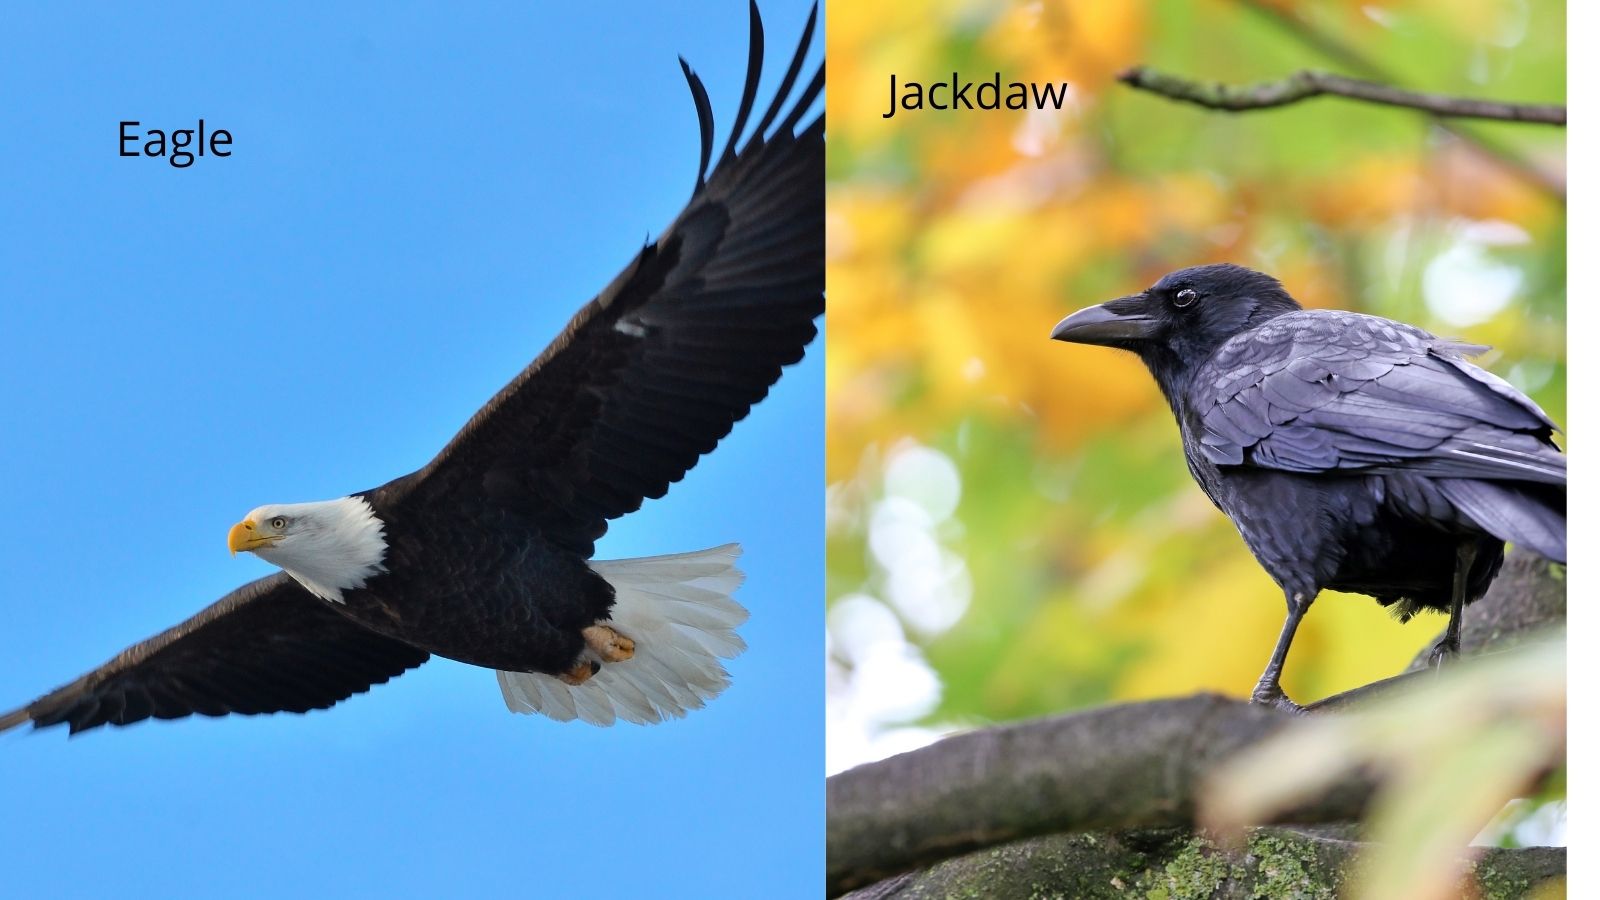 Eagle and Jacdaw